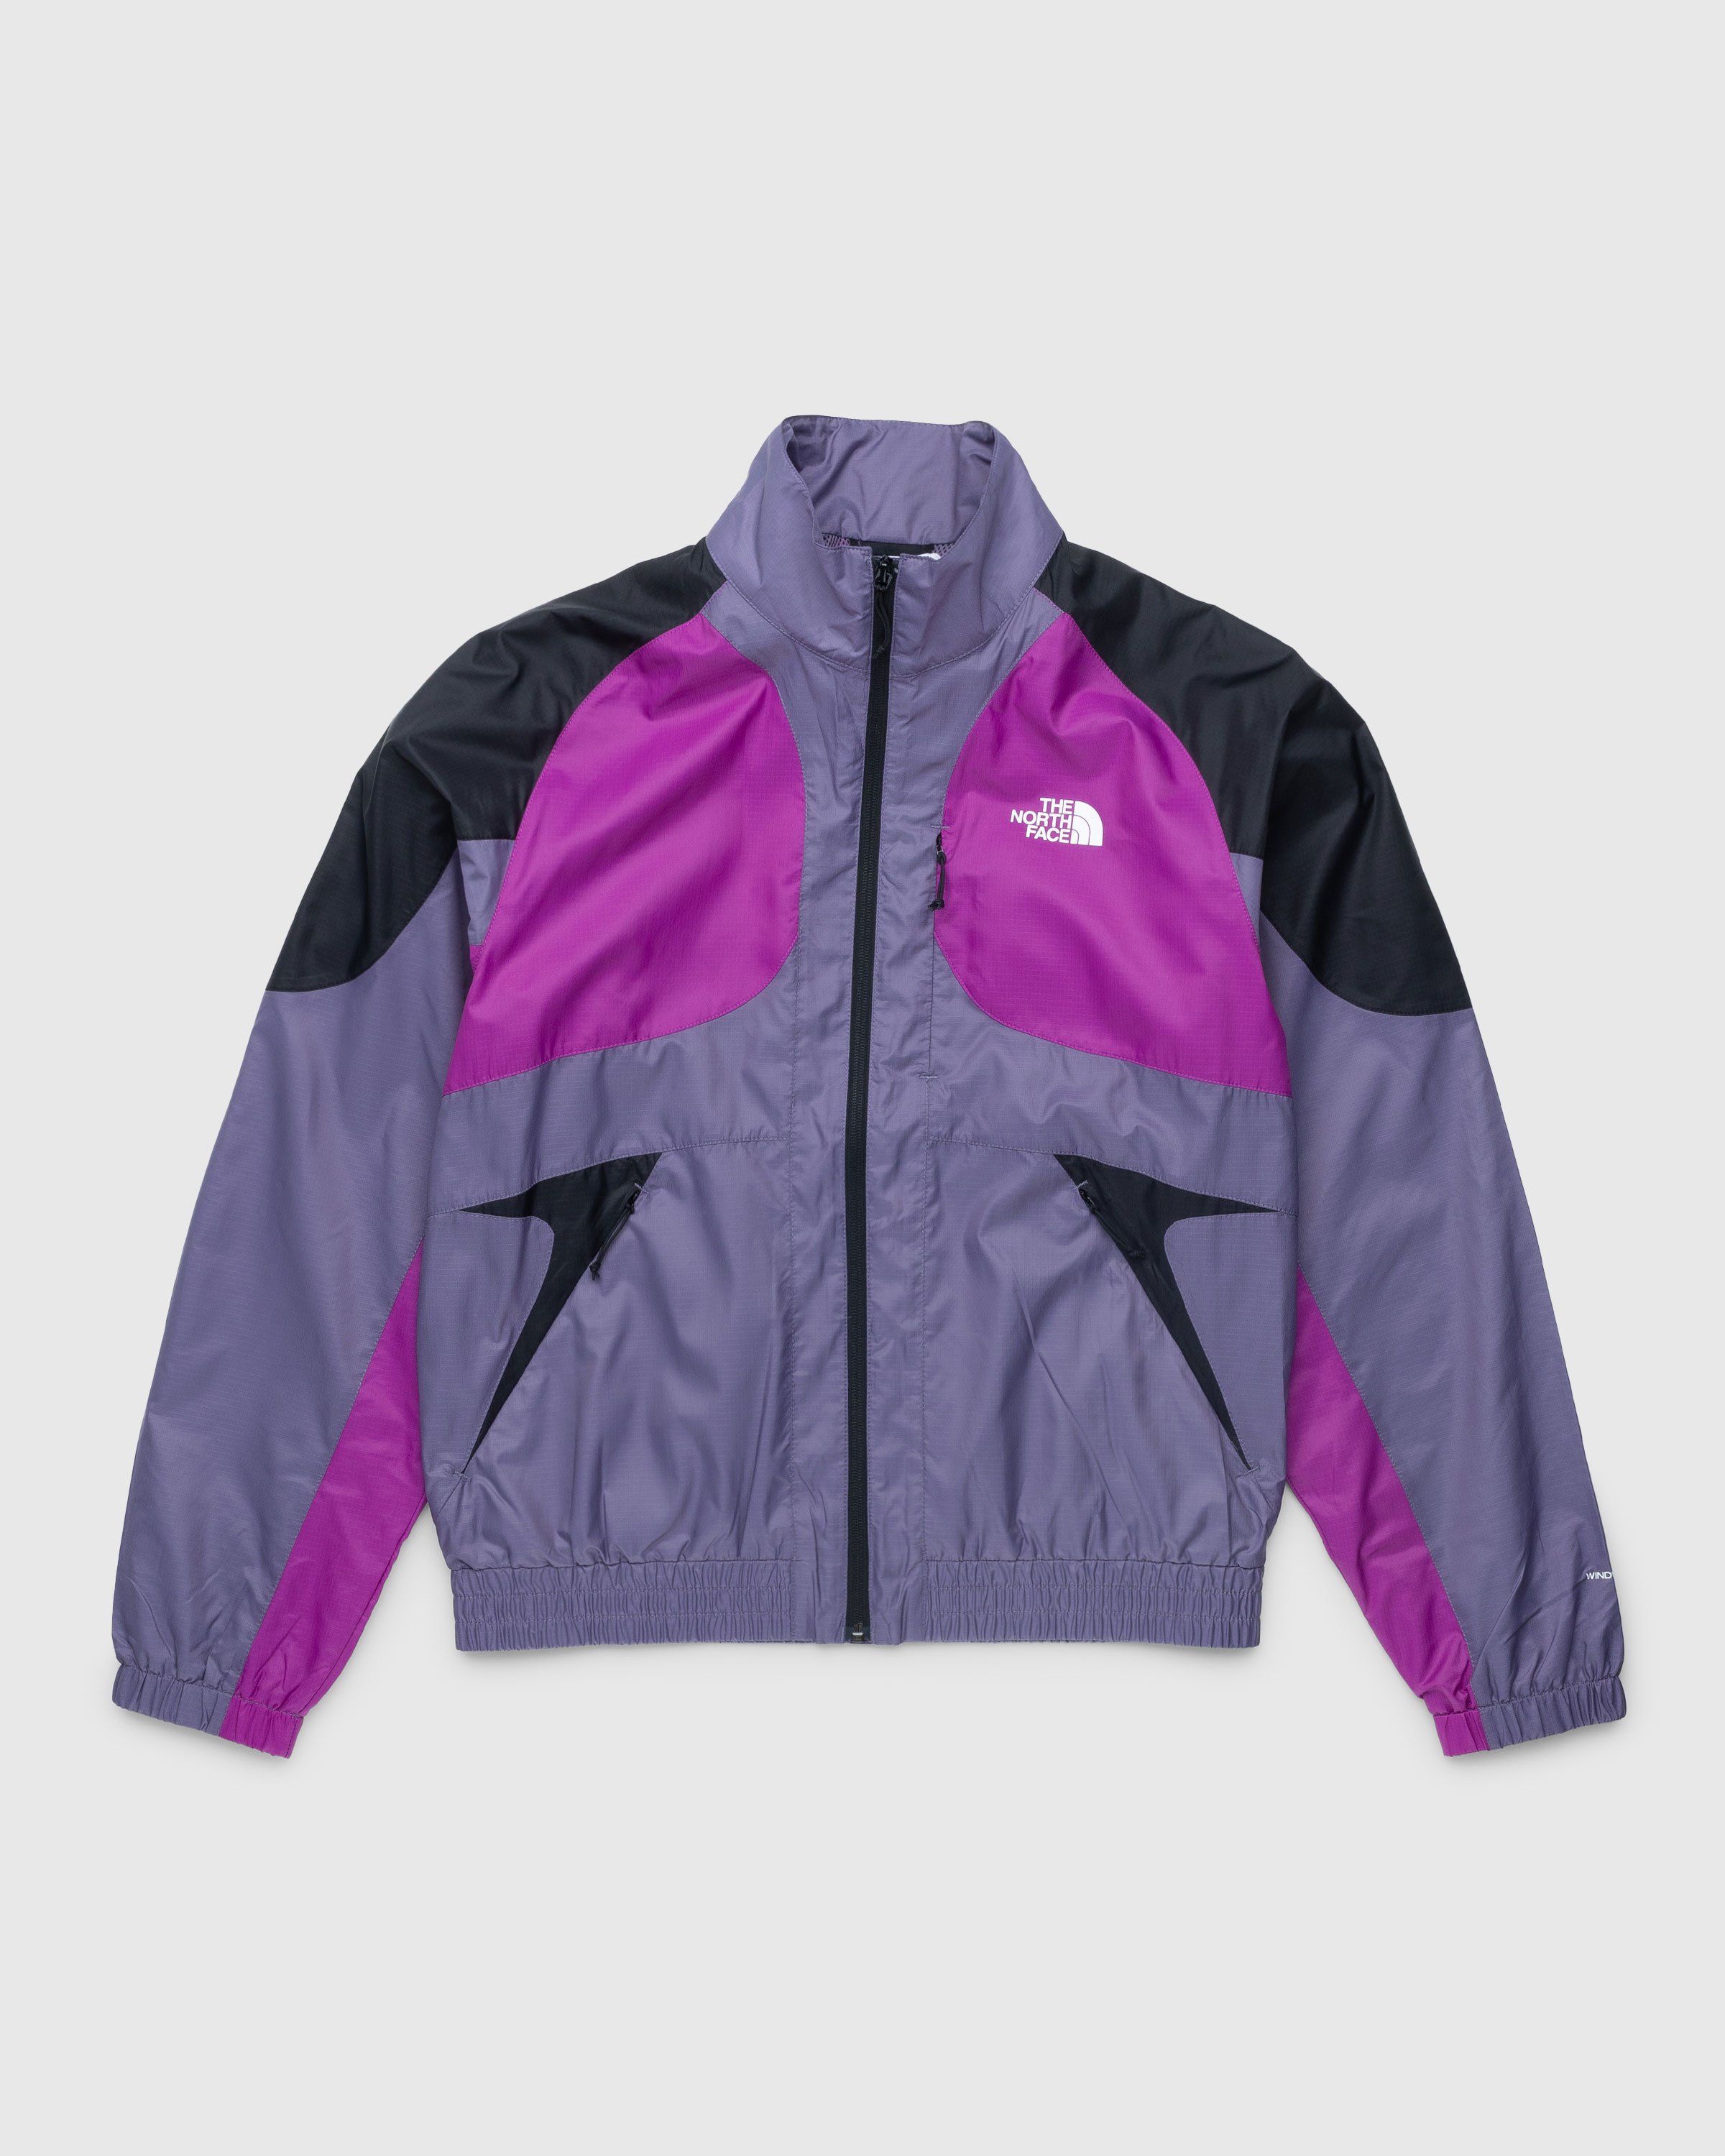 The North Face – TNF X Jacket | Highsnobiety Shop